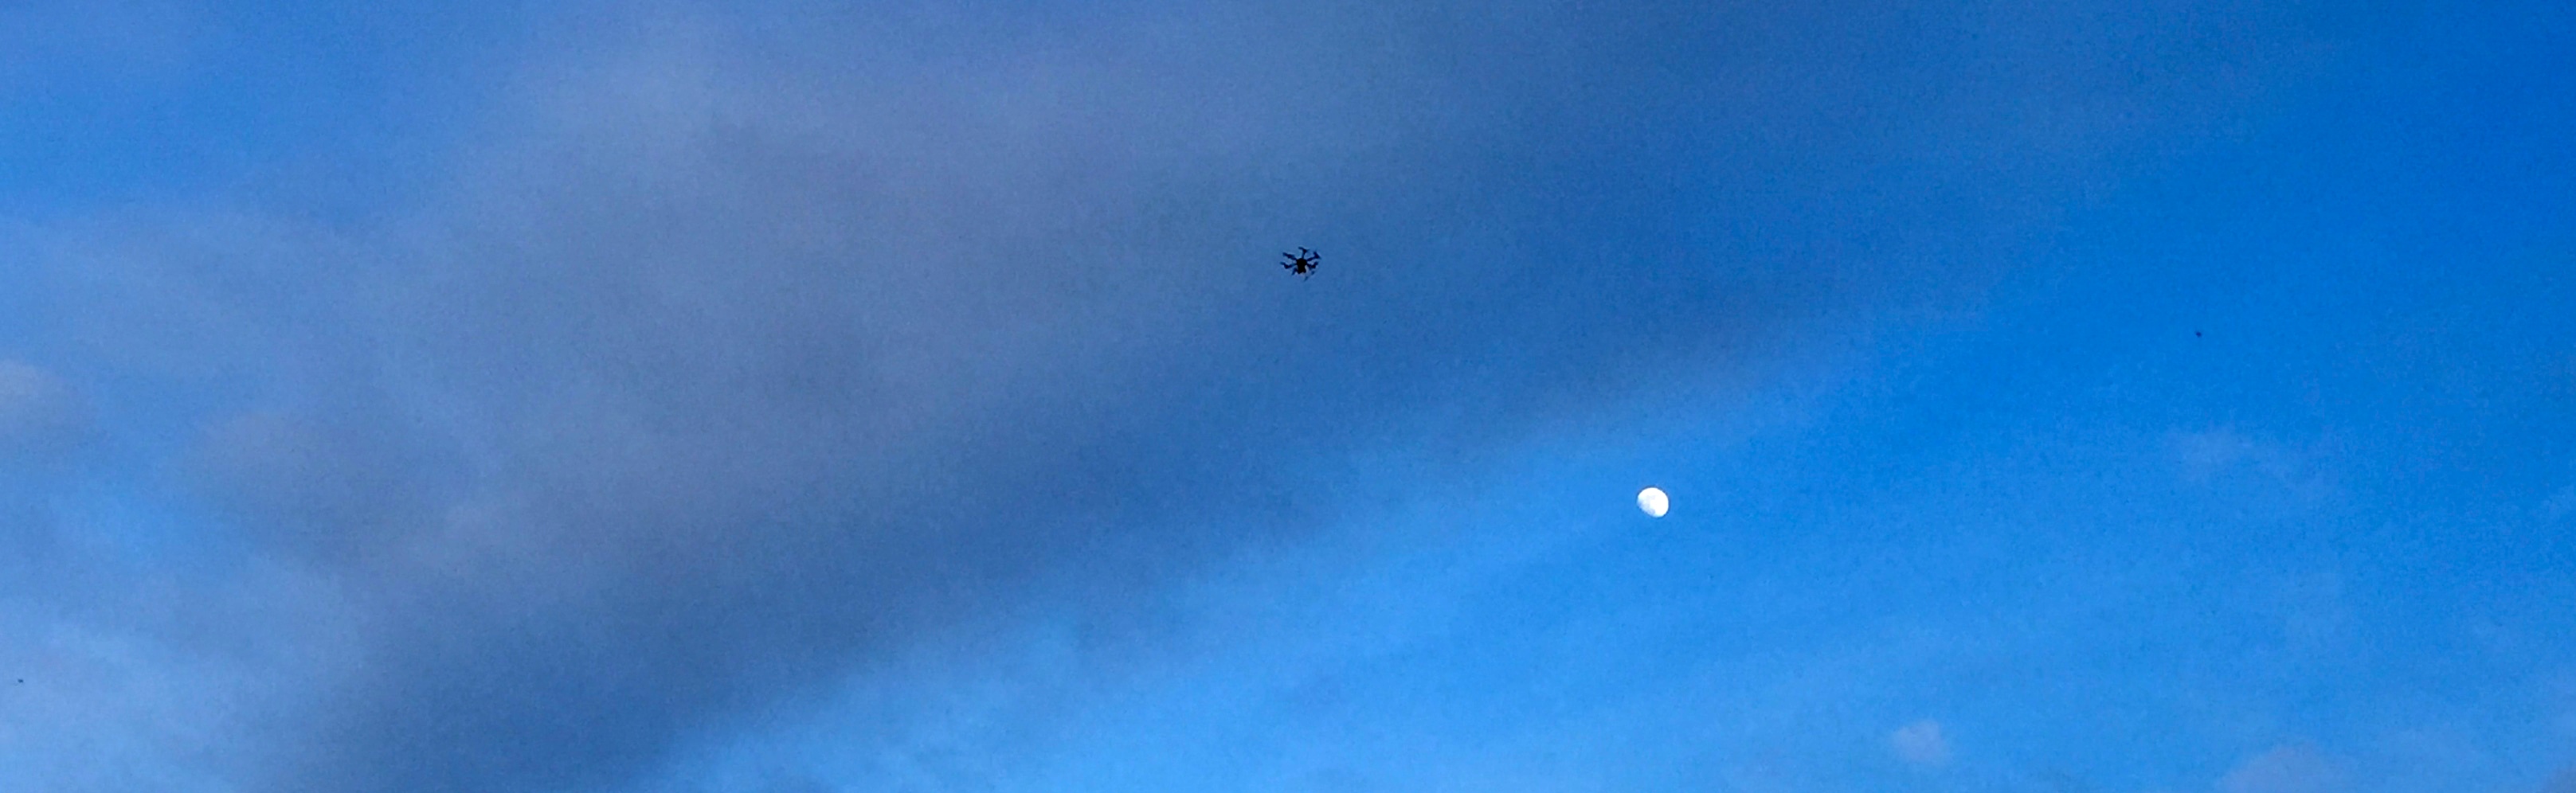 Drohne Mond